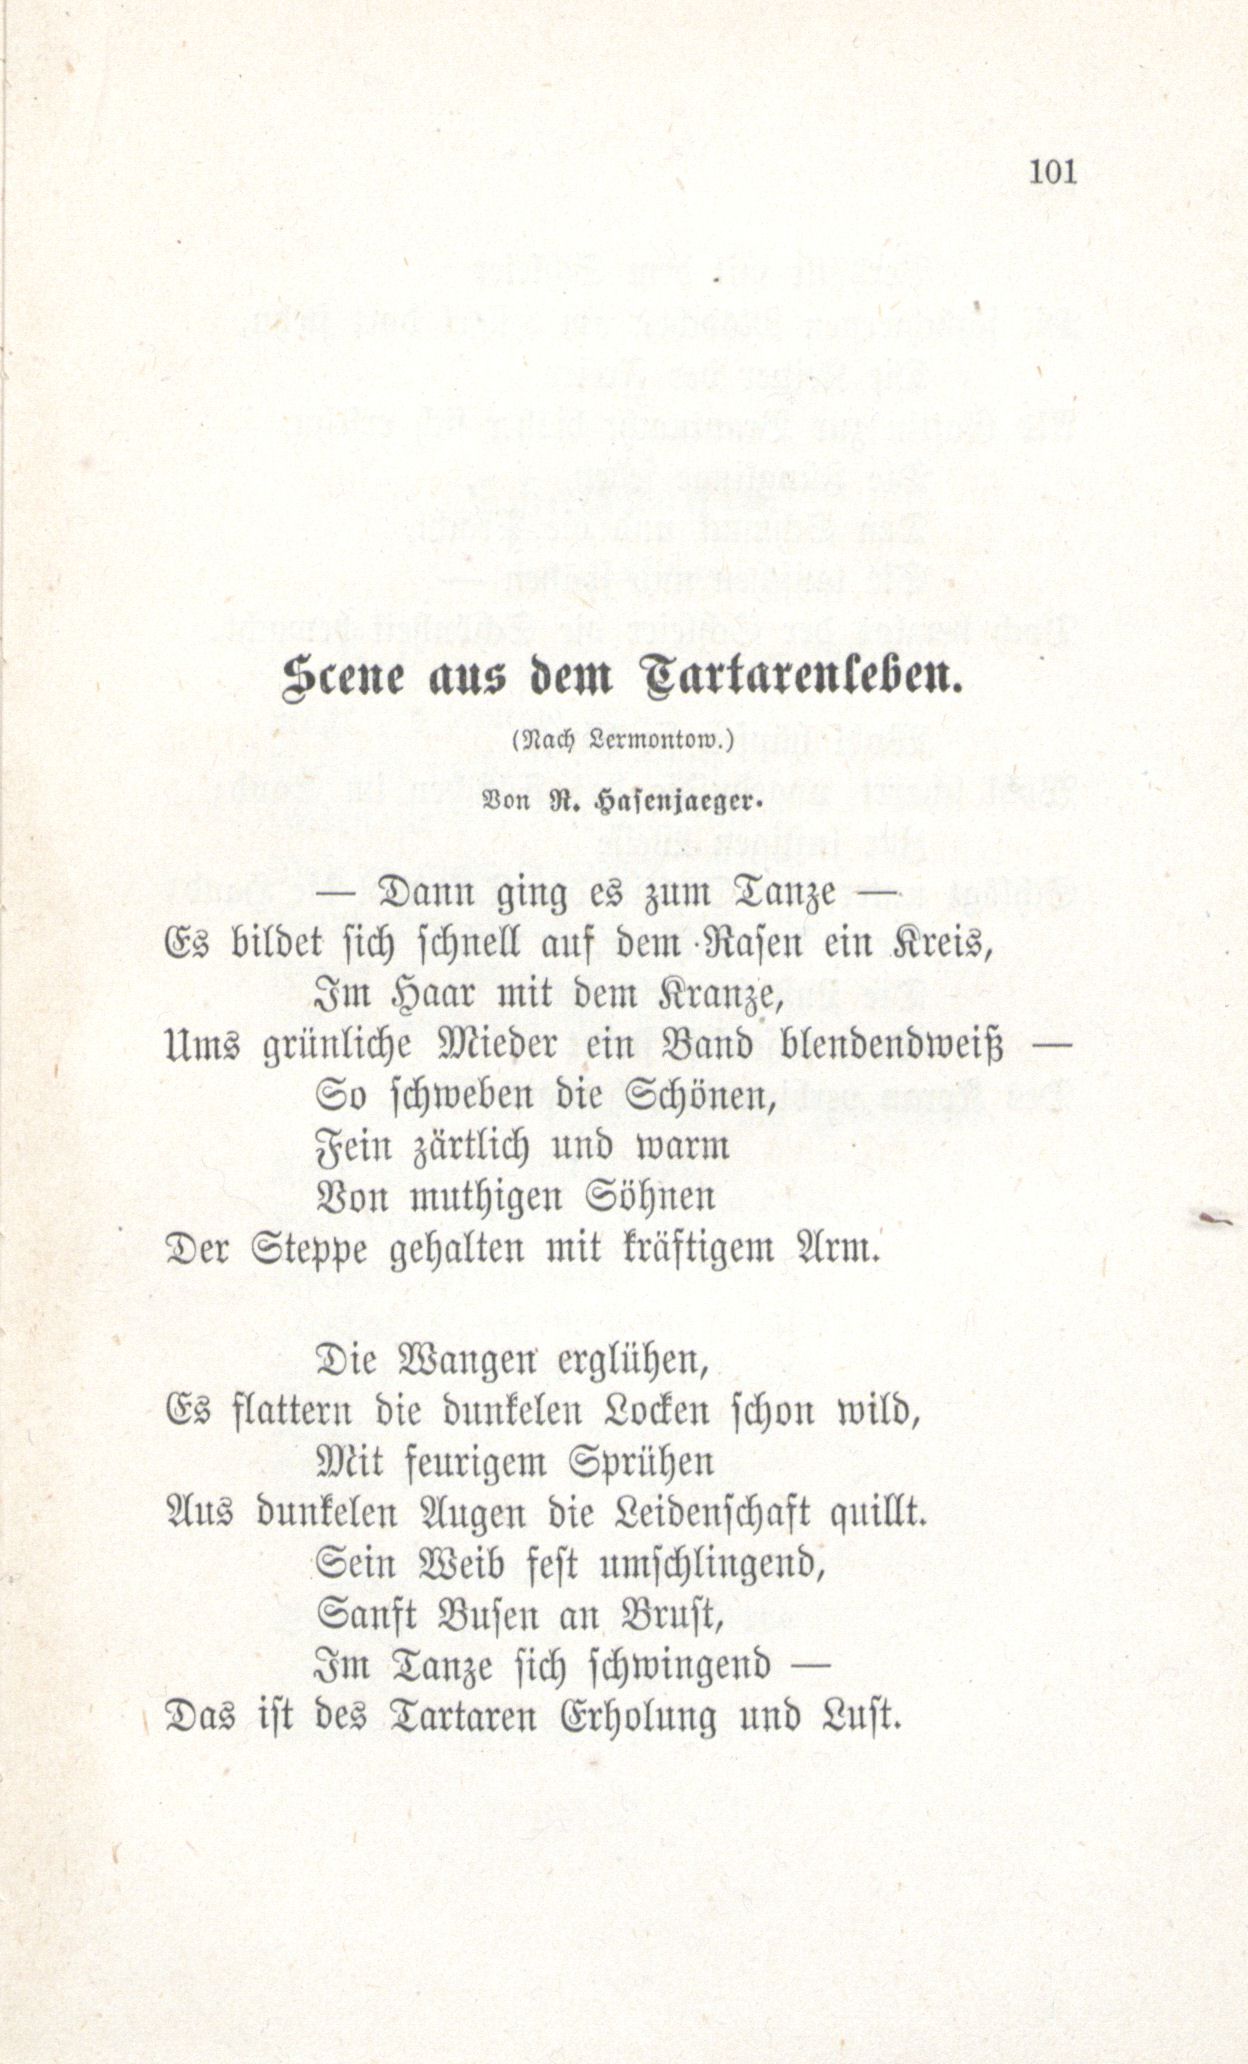 Erinnerung an die Fraternitas (1880) | 102. (101) Main body of text